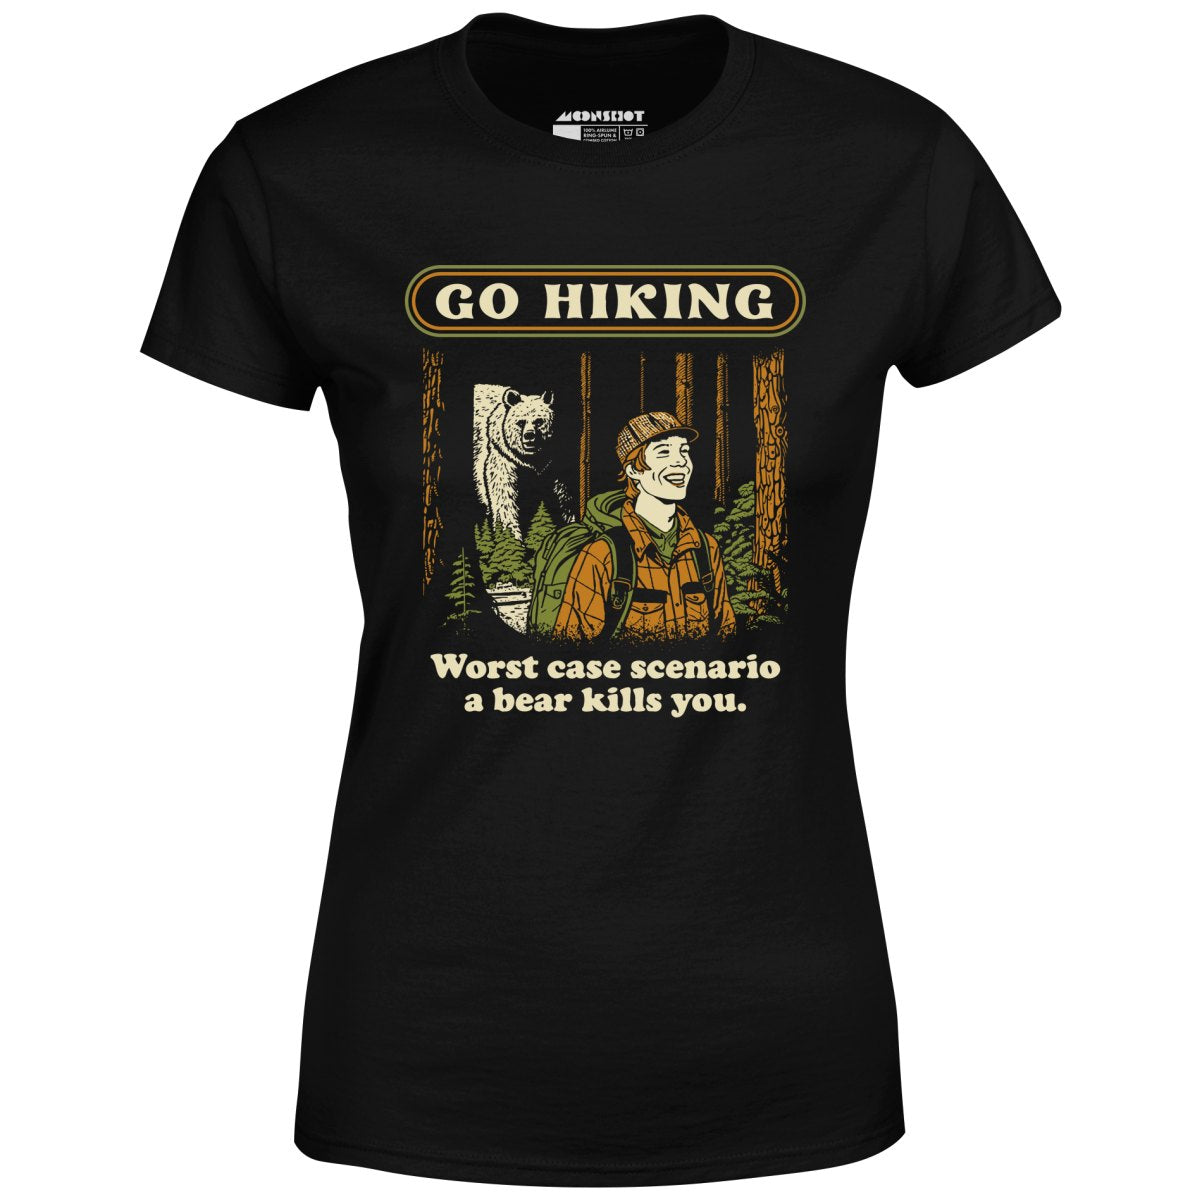 Go Hiking - Women's T-Shirt